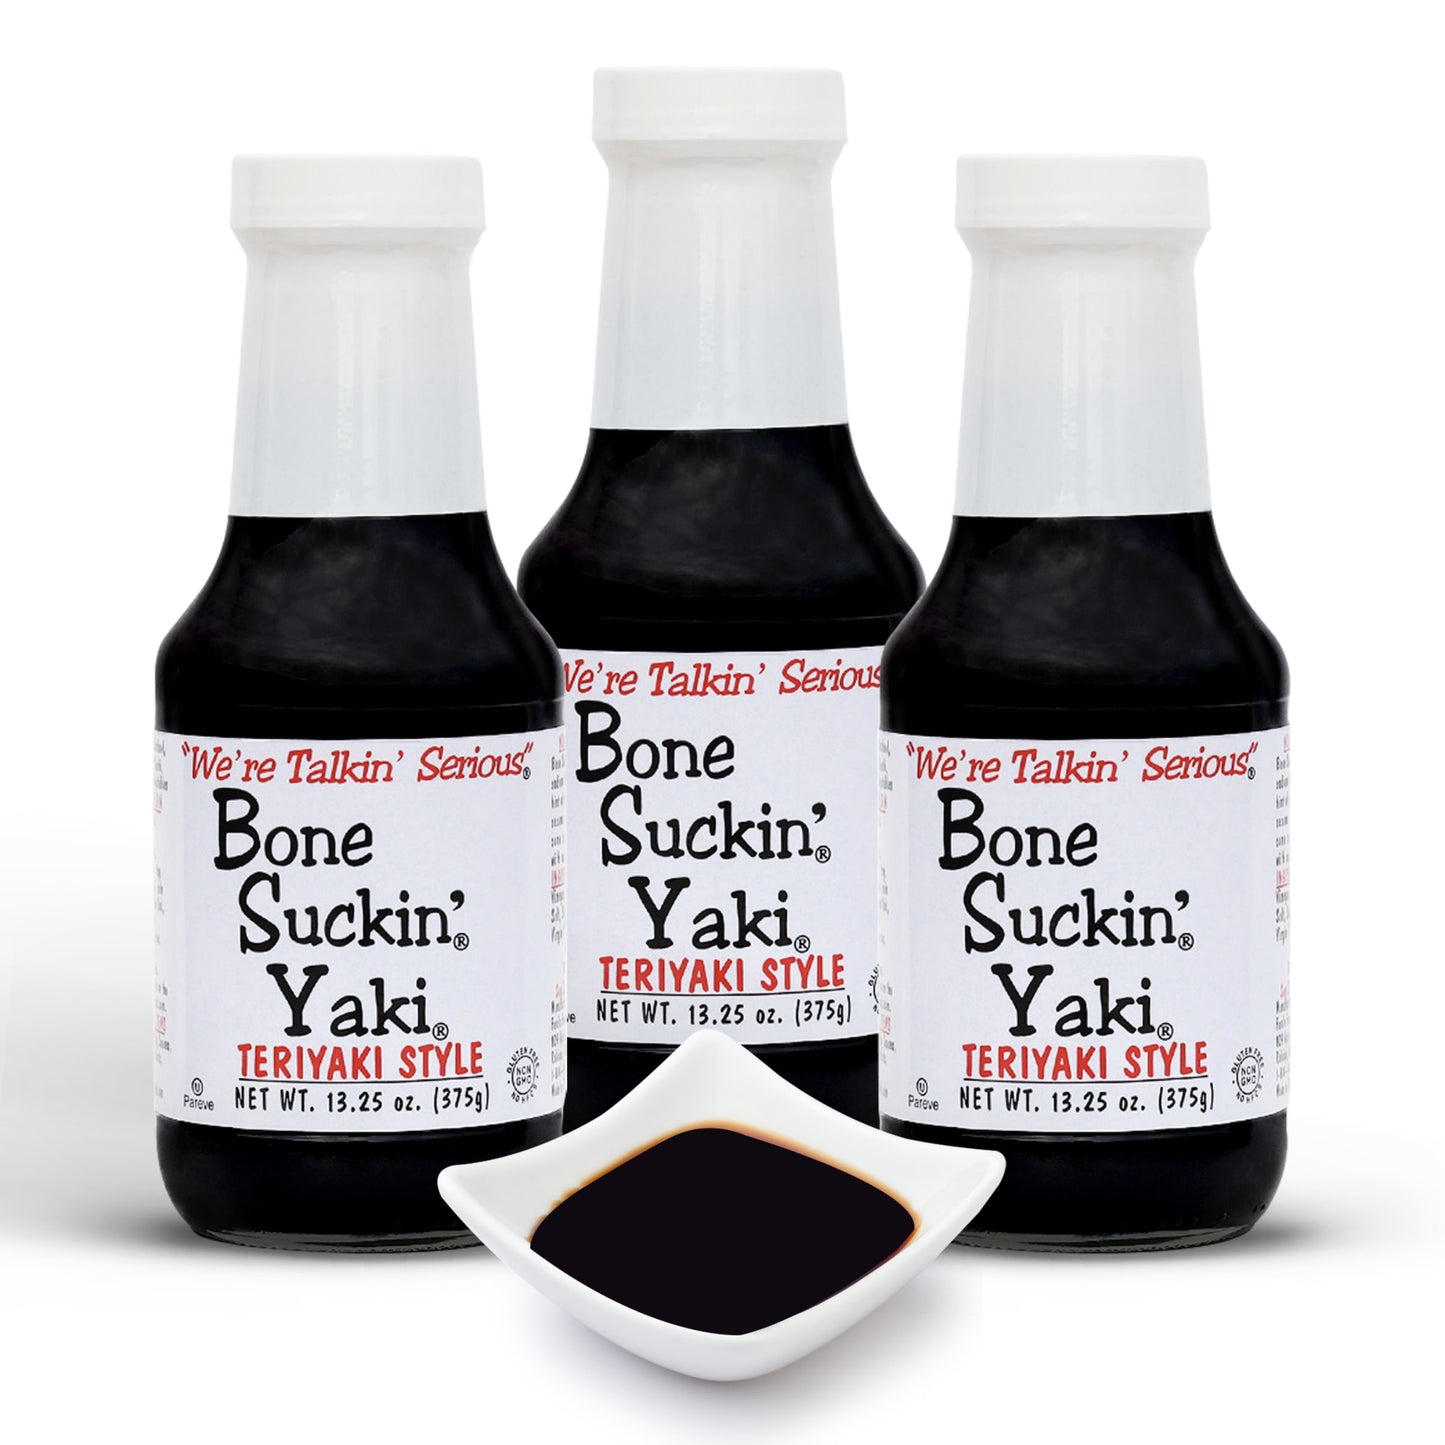 Bone Suckin' Yaki Teriyaki Style - 13.25 oz in Glass Bottle. For Pork Tenderloin, Salmon, Thin Cut Steaks, Stir Fry - Made w/ Tamari Soy Sauce, Balsamic Vinegar & Olive Oil. Gluten Free, Non-Gmo, Kosher , 3 pack